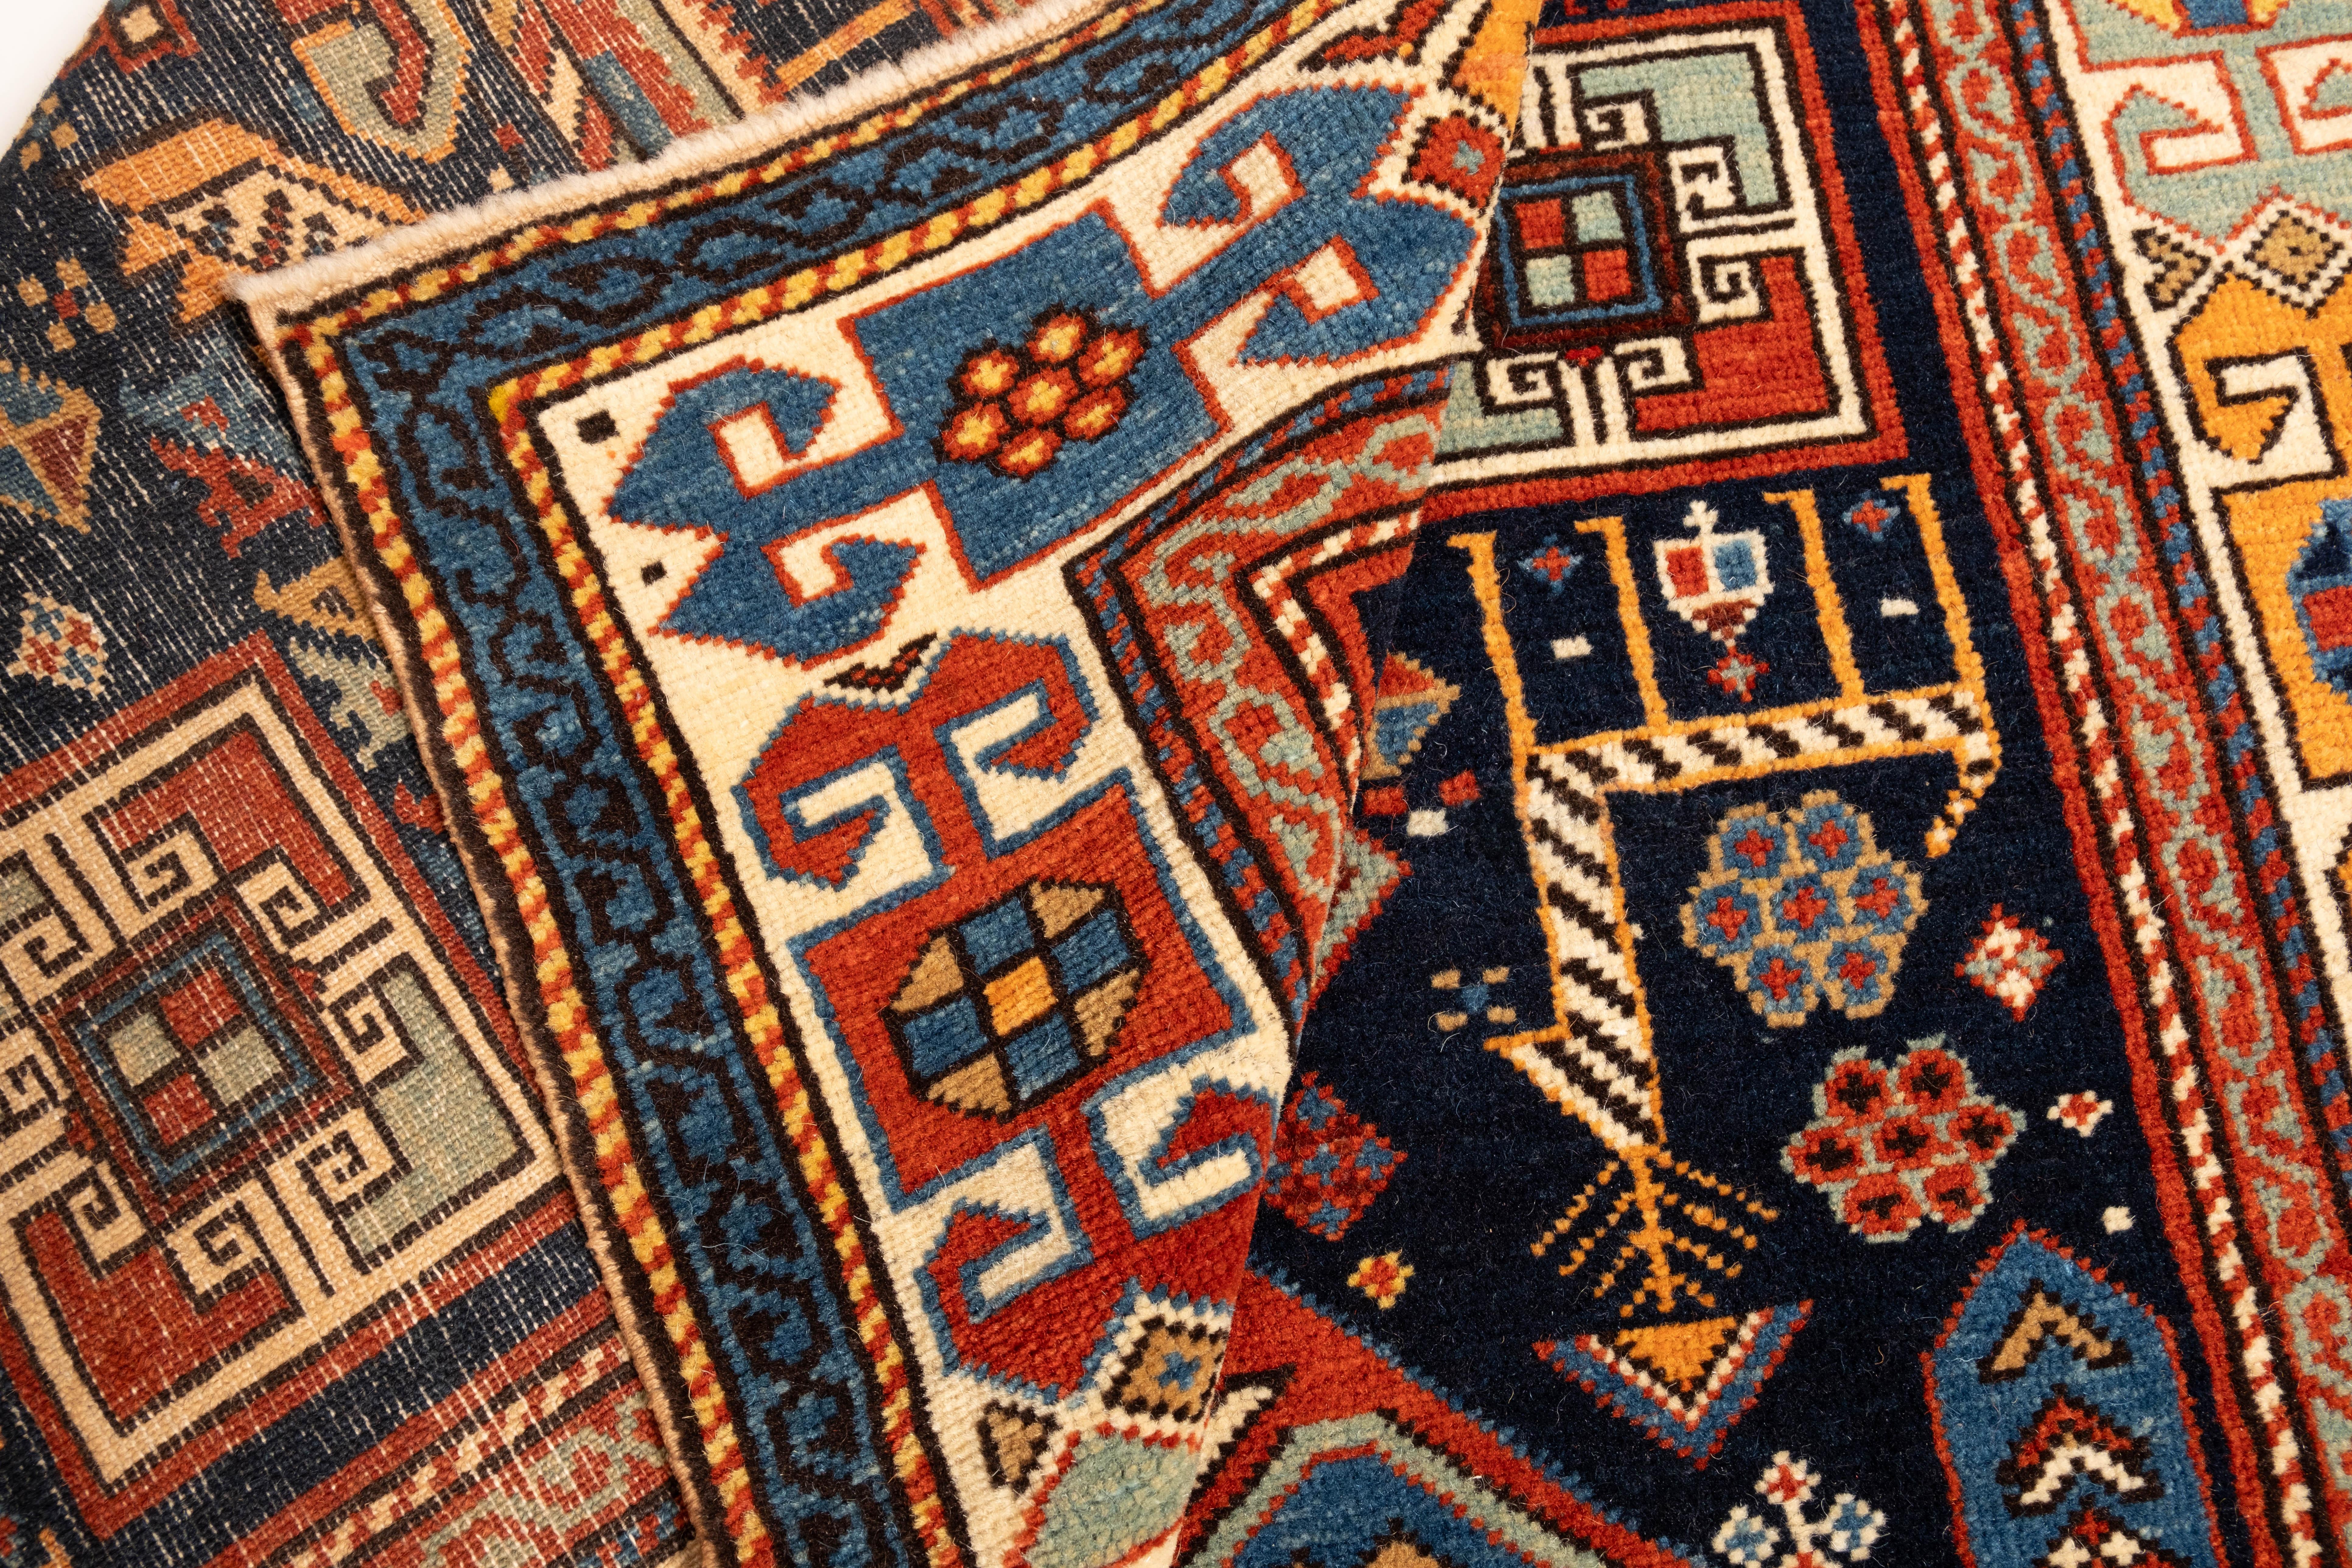 Contemporary Ararat Rugs Akstafa Kazak Rug, 19th C. Caucasian Revival Carpet Natural Dyed For Sale